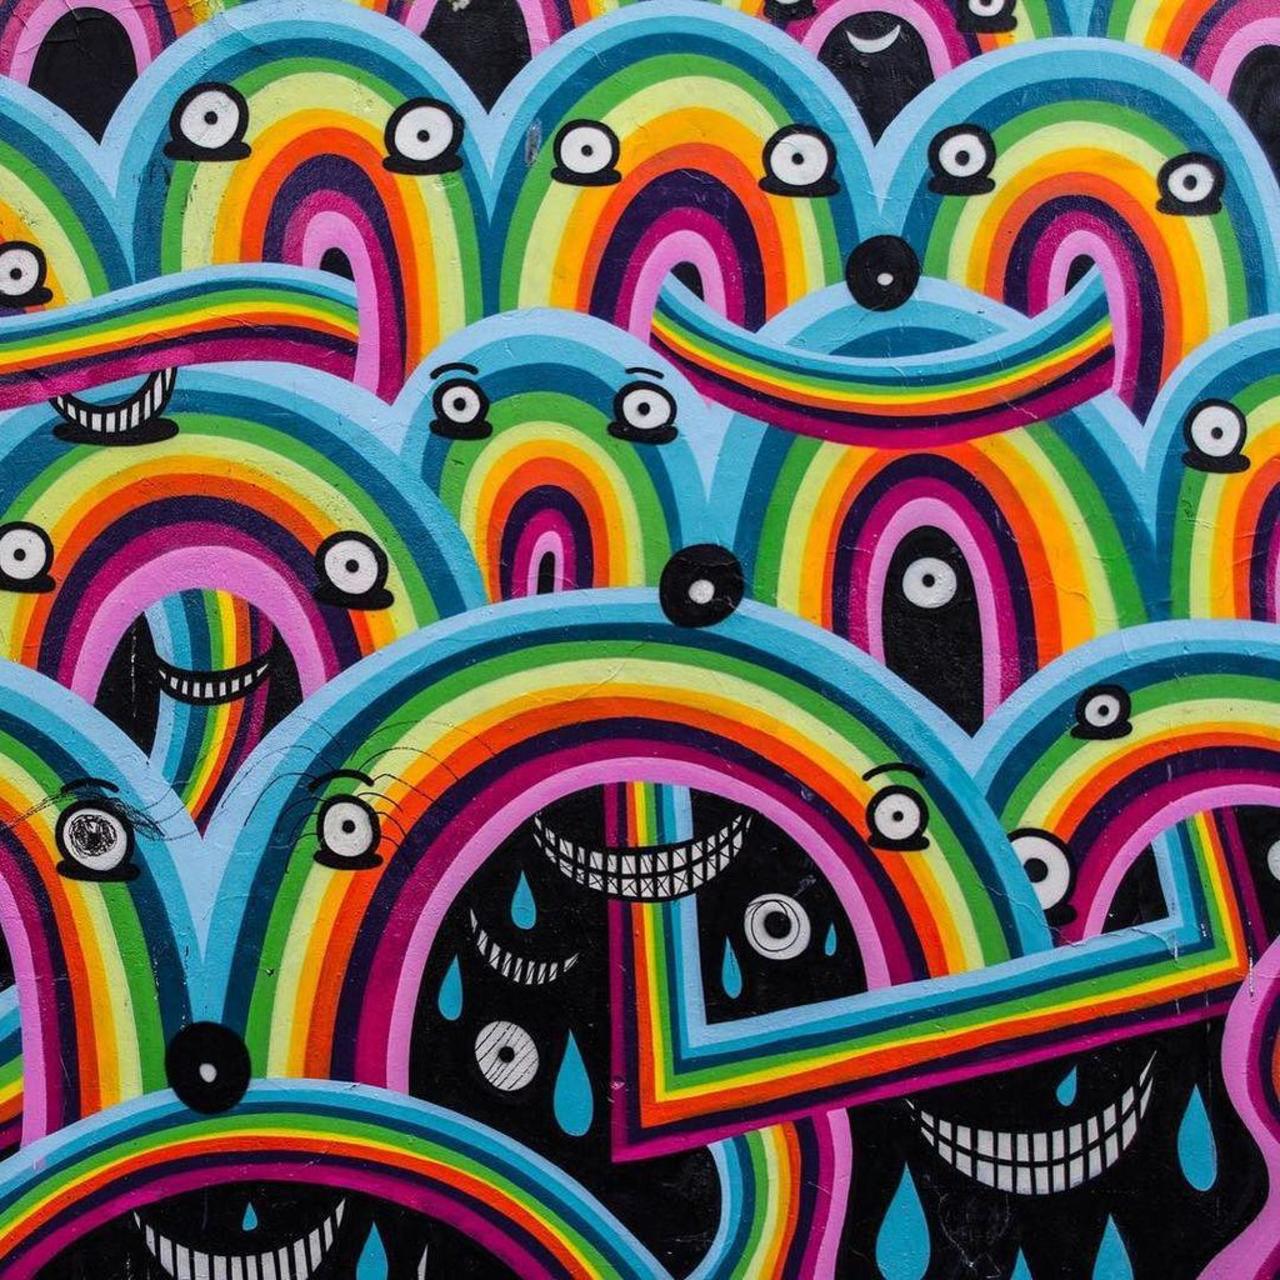 Nightmares on a Wall #nightmare #streetart #street #streetphotography #graffiti #tagging #… http://ift.tt/1KHYRB0 http://t.co/kGn7ZexsNe